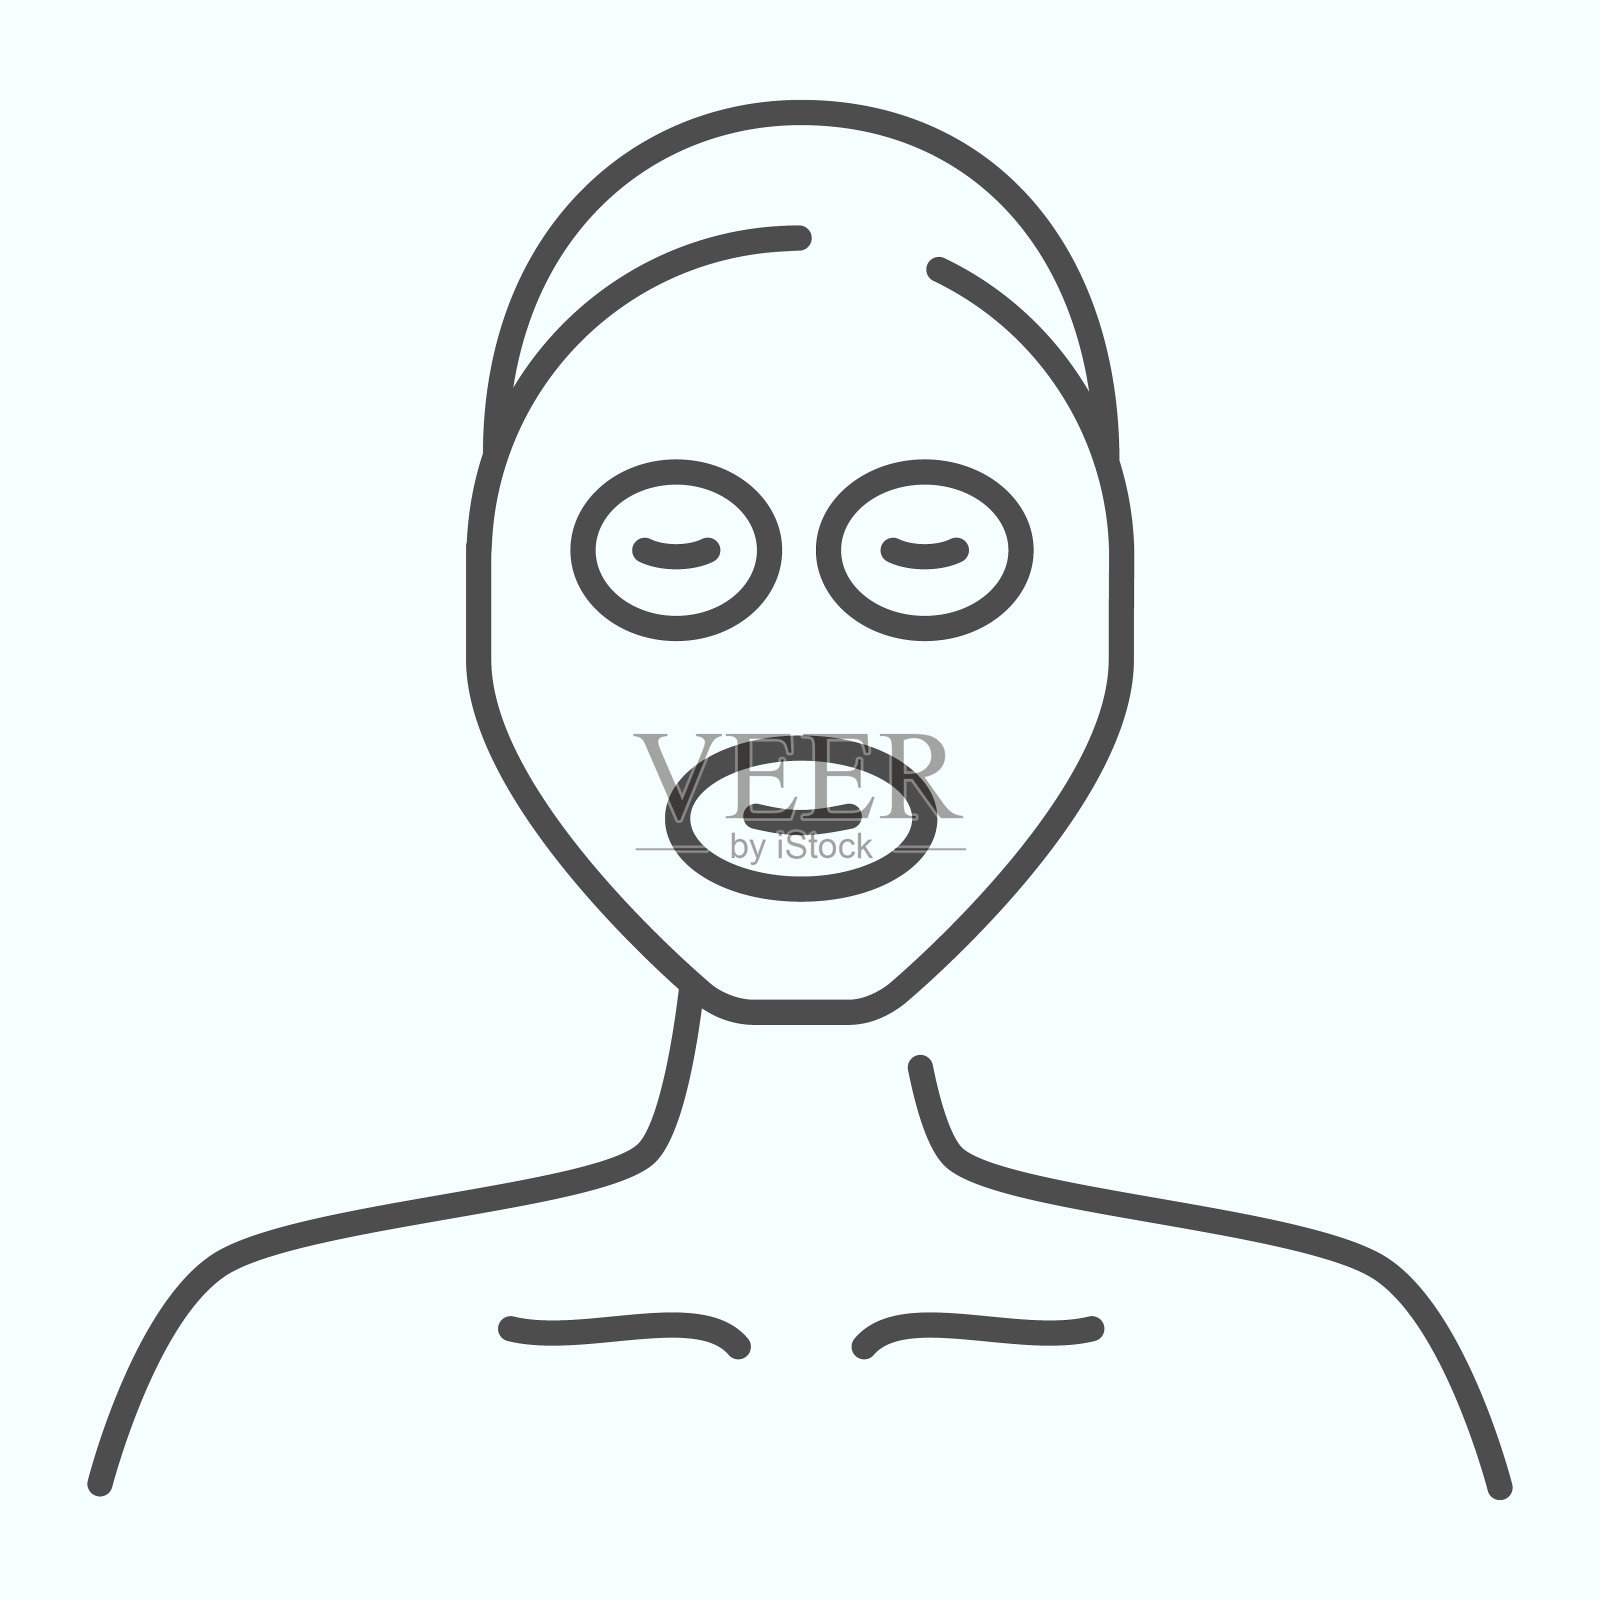 Beaty面具细线图标。化妆面具的脸矢量插图孤立在白色。皮肤轮廓风格设计，专为网页和应用设计。Eps 10。设计元素图片